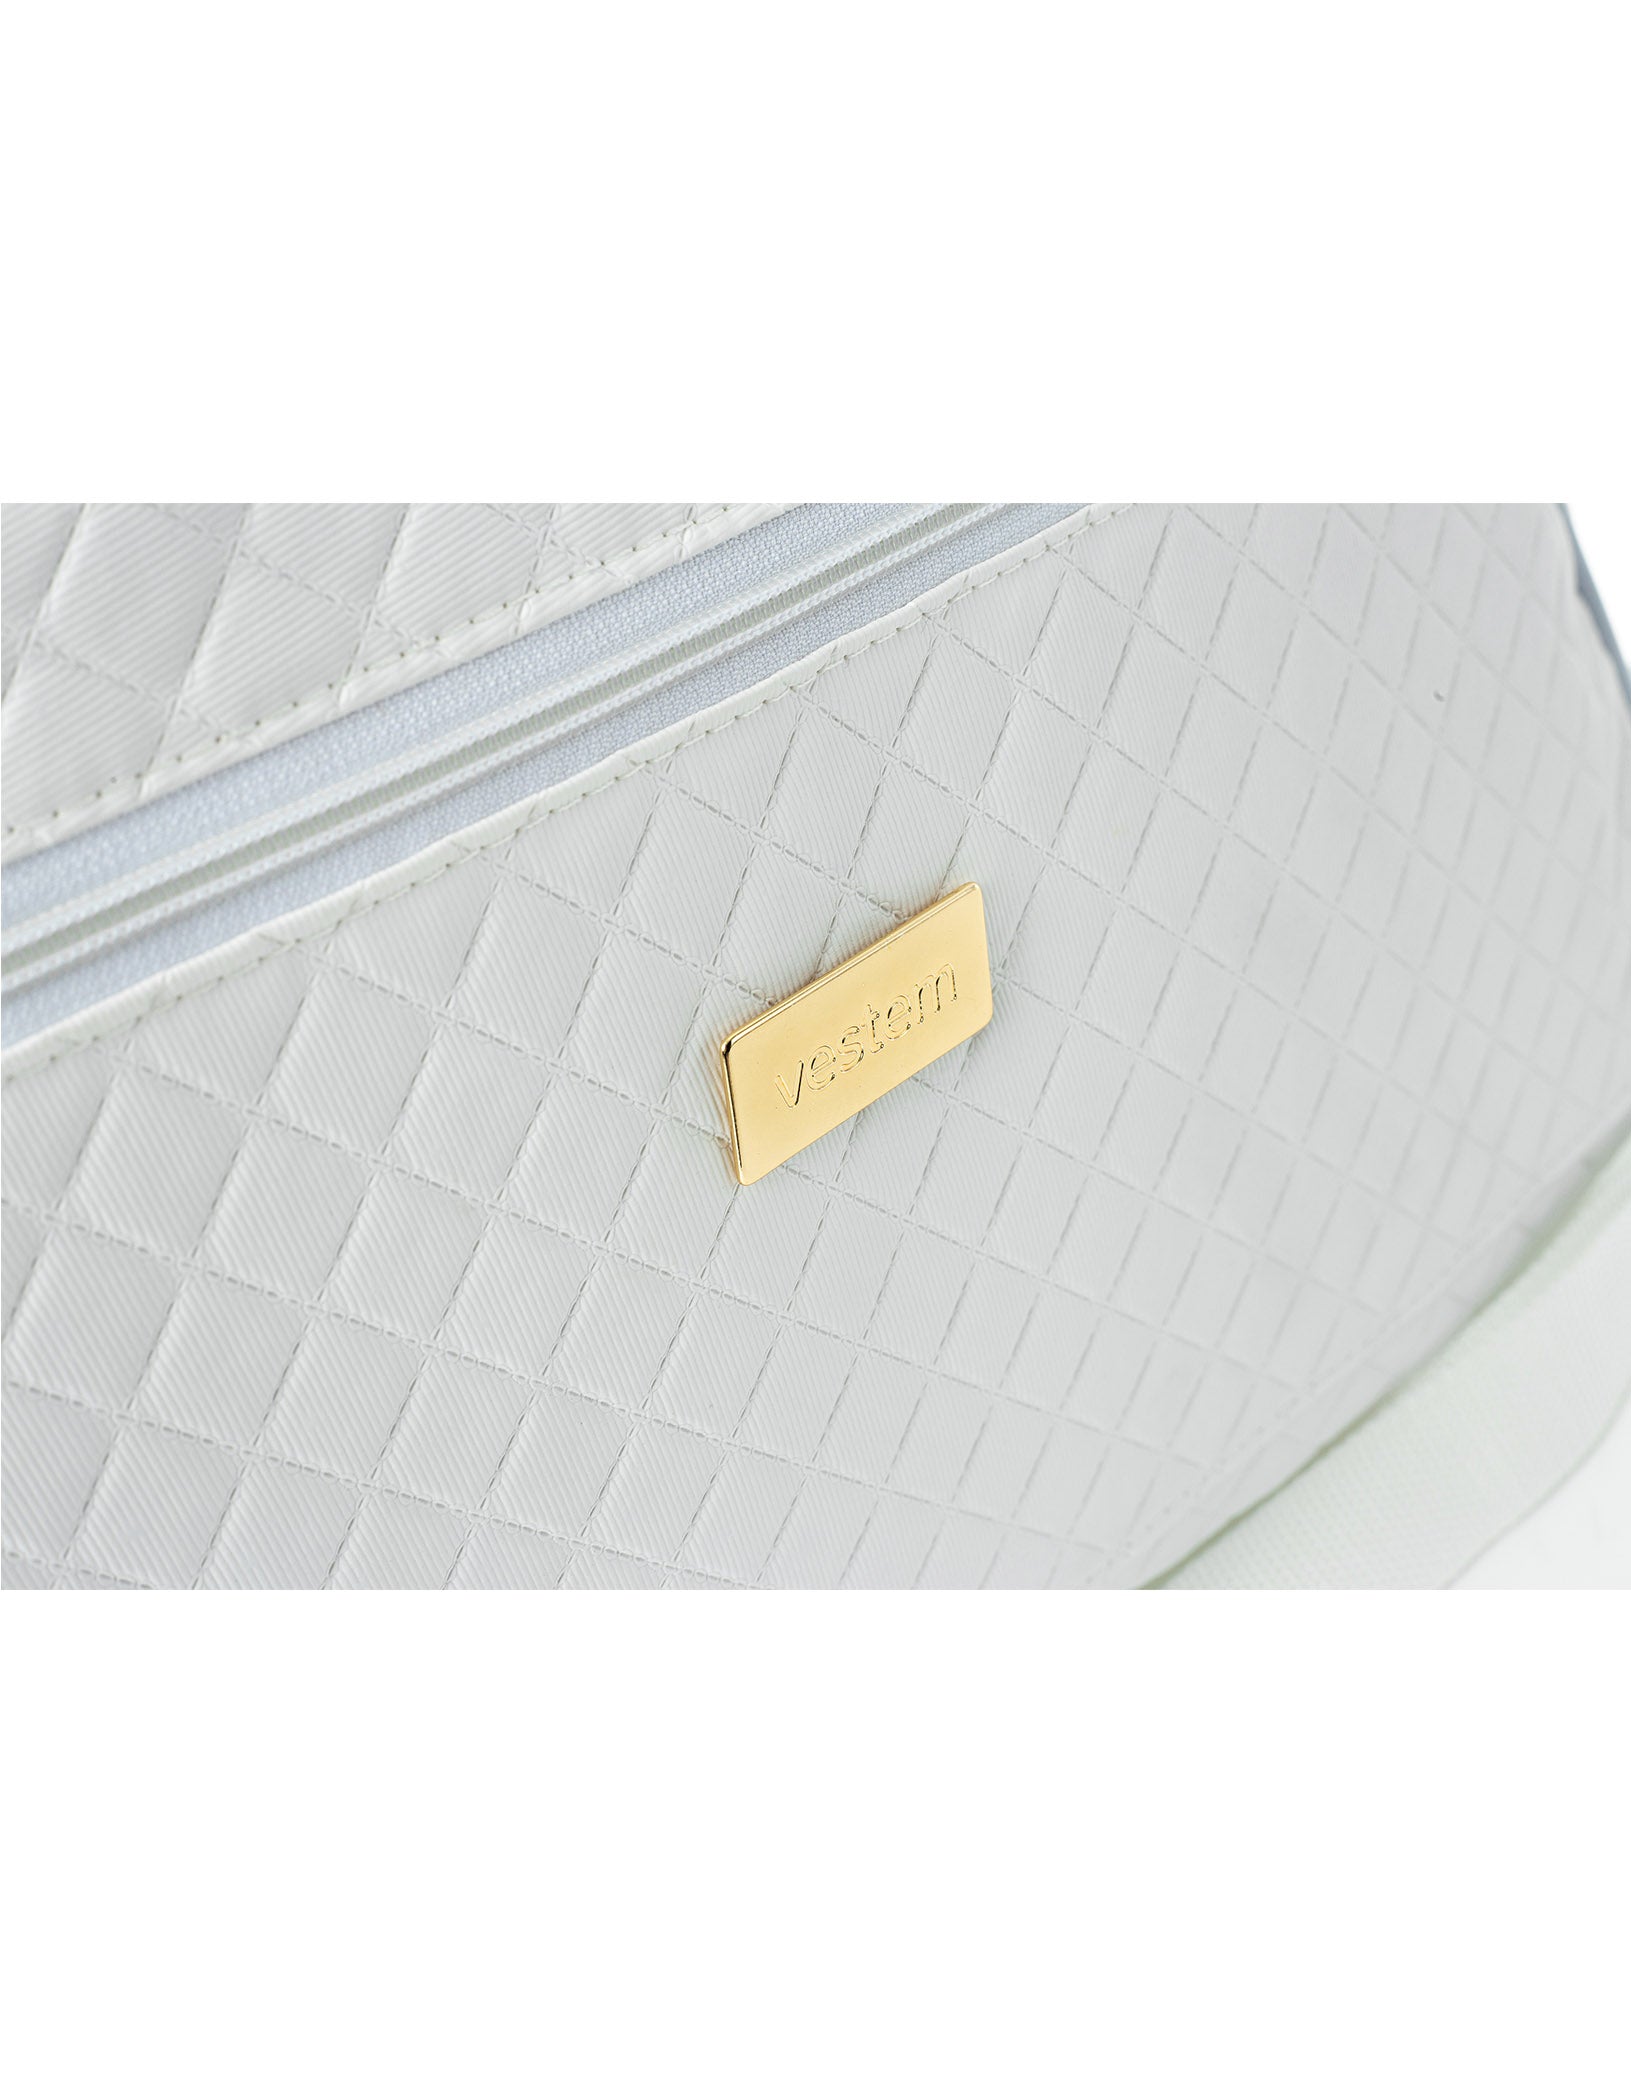 Vestem - Hand Bag Iconic Mameshsse White - BOL14.C0001